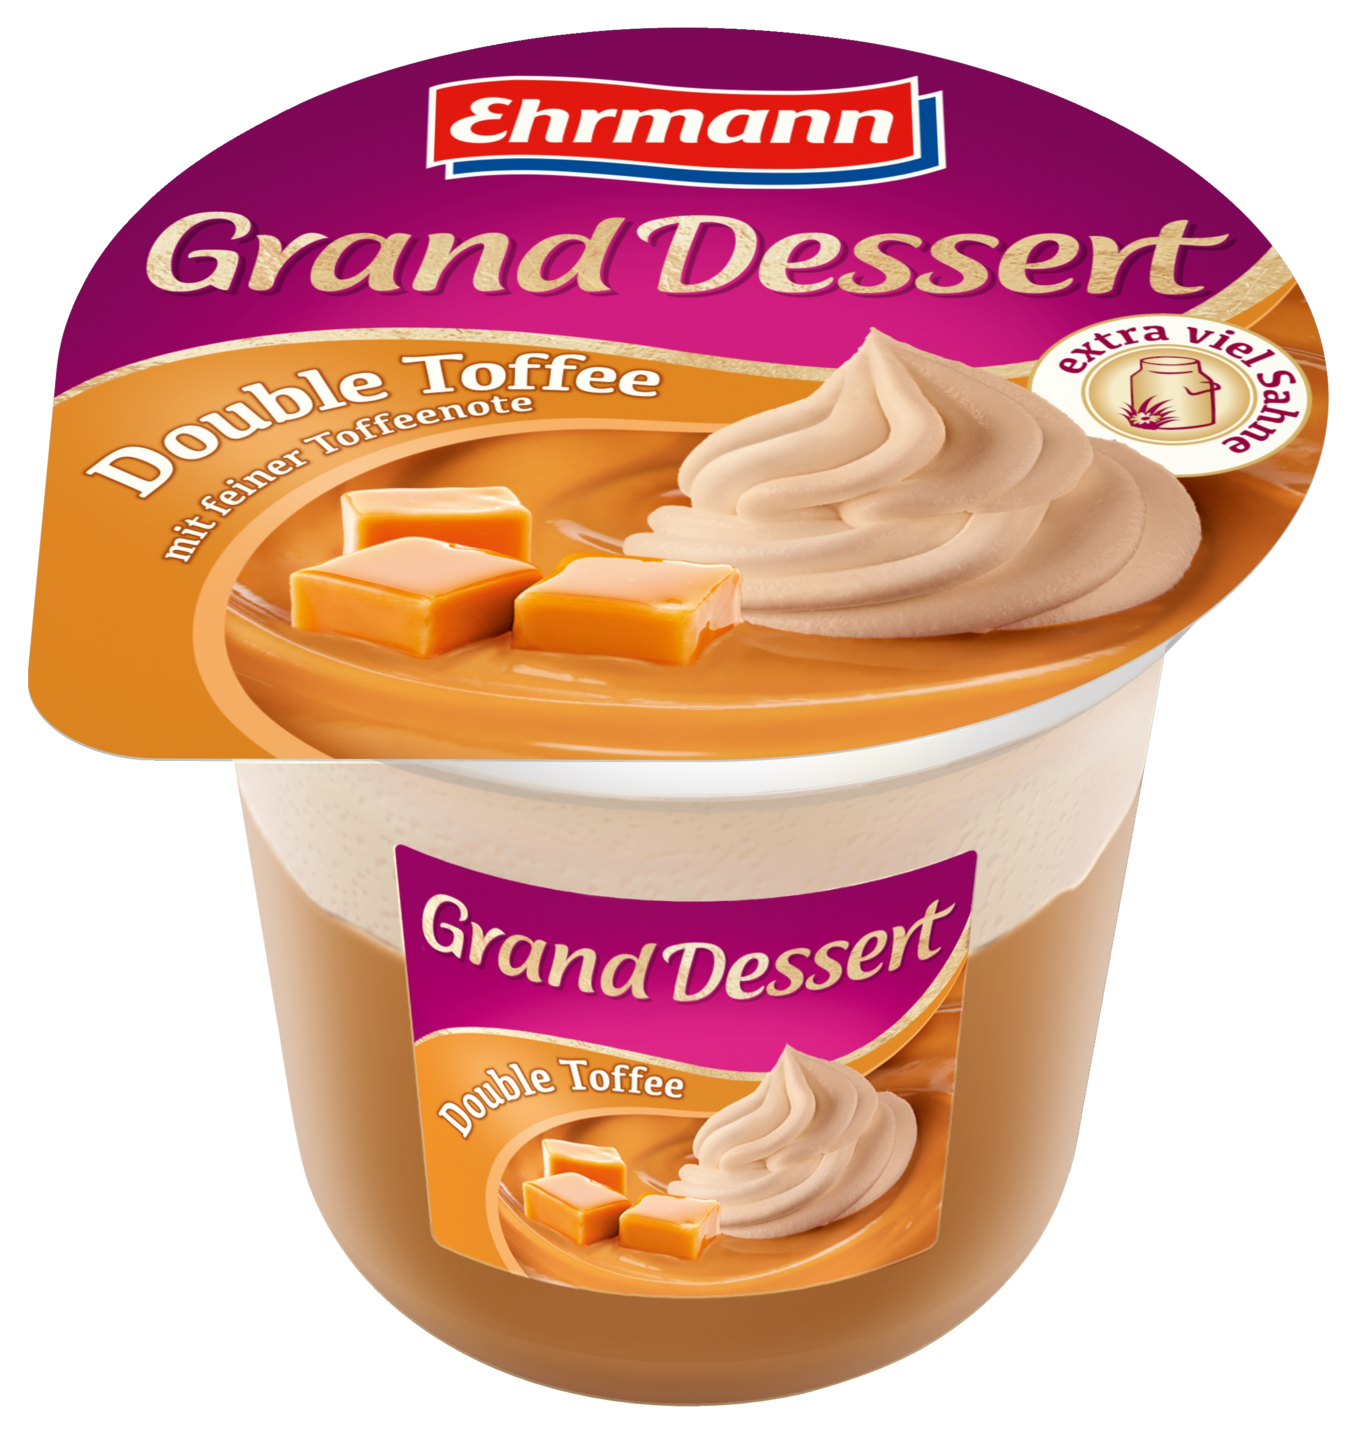 Ehrmann Grand Dessert tuplatoffee 190g